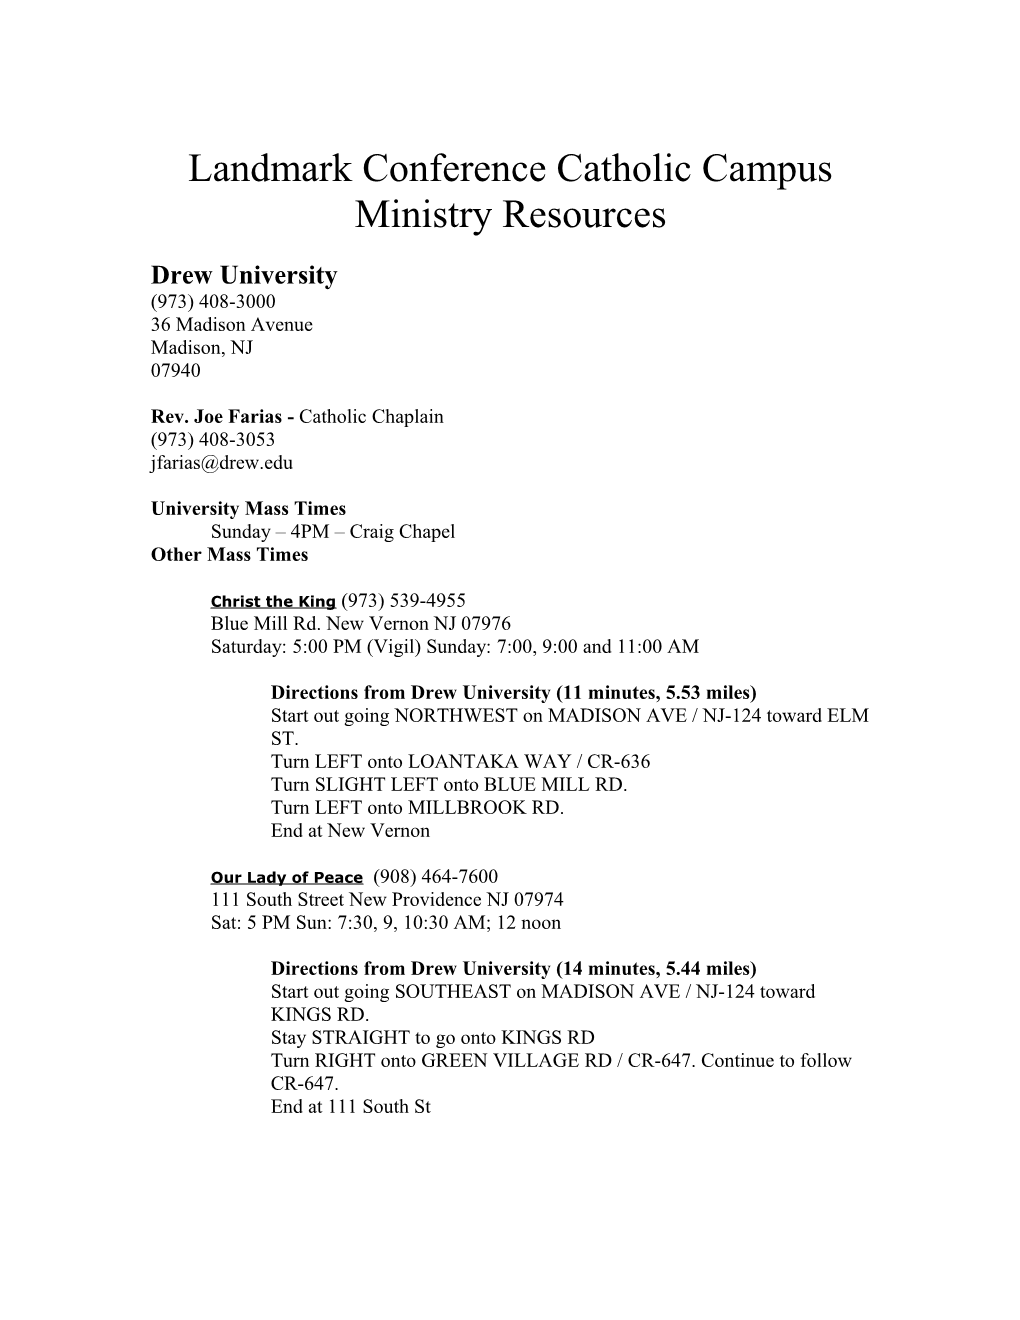 Landmark Conference Catholic Campus Ministry Resources 2